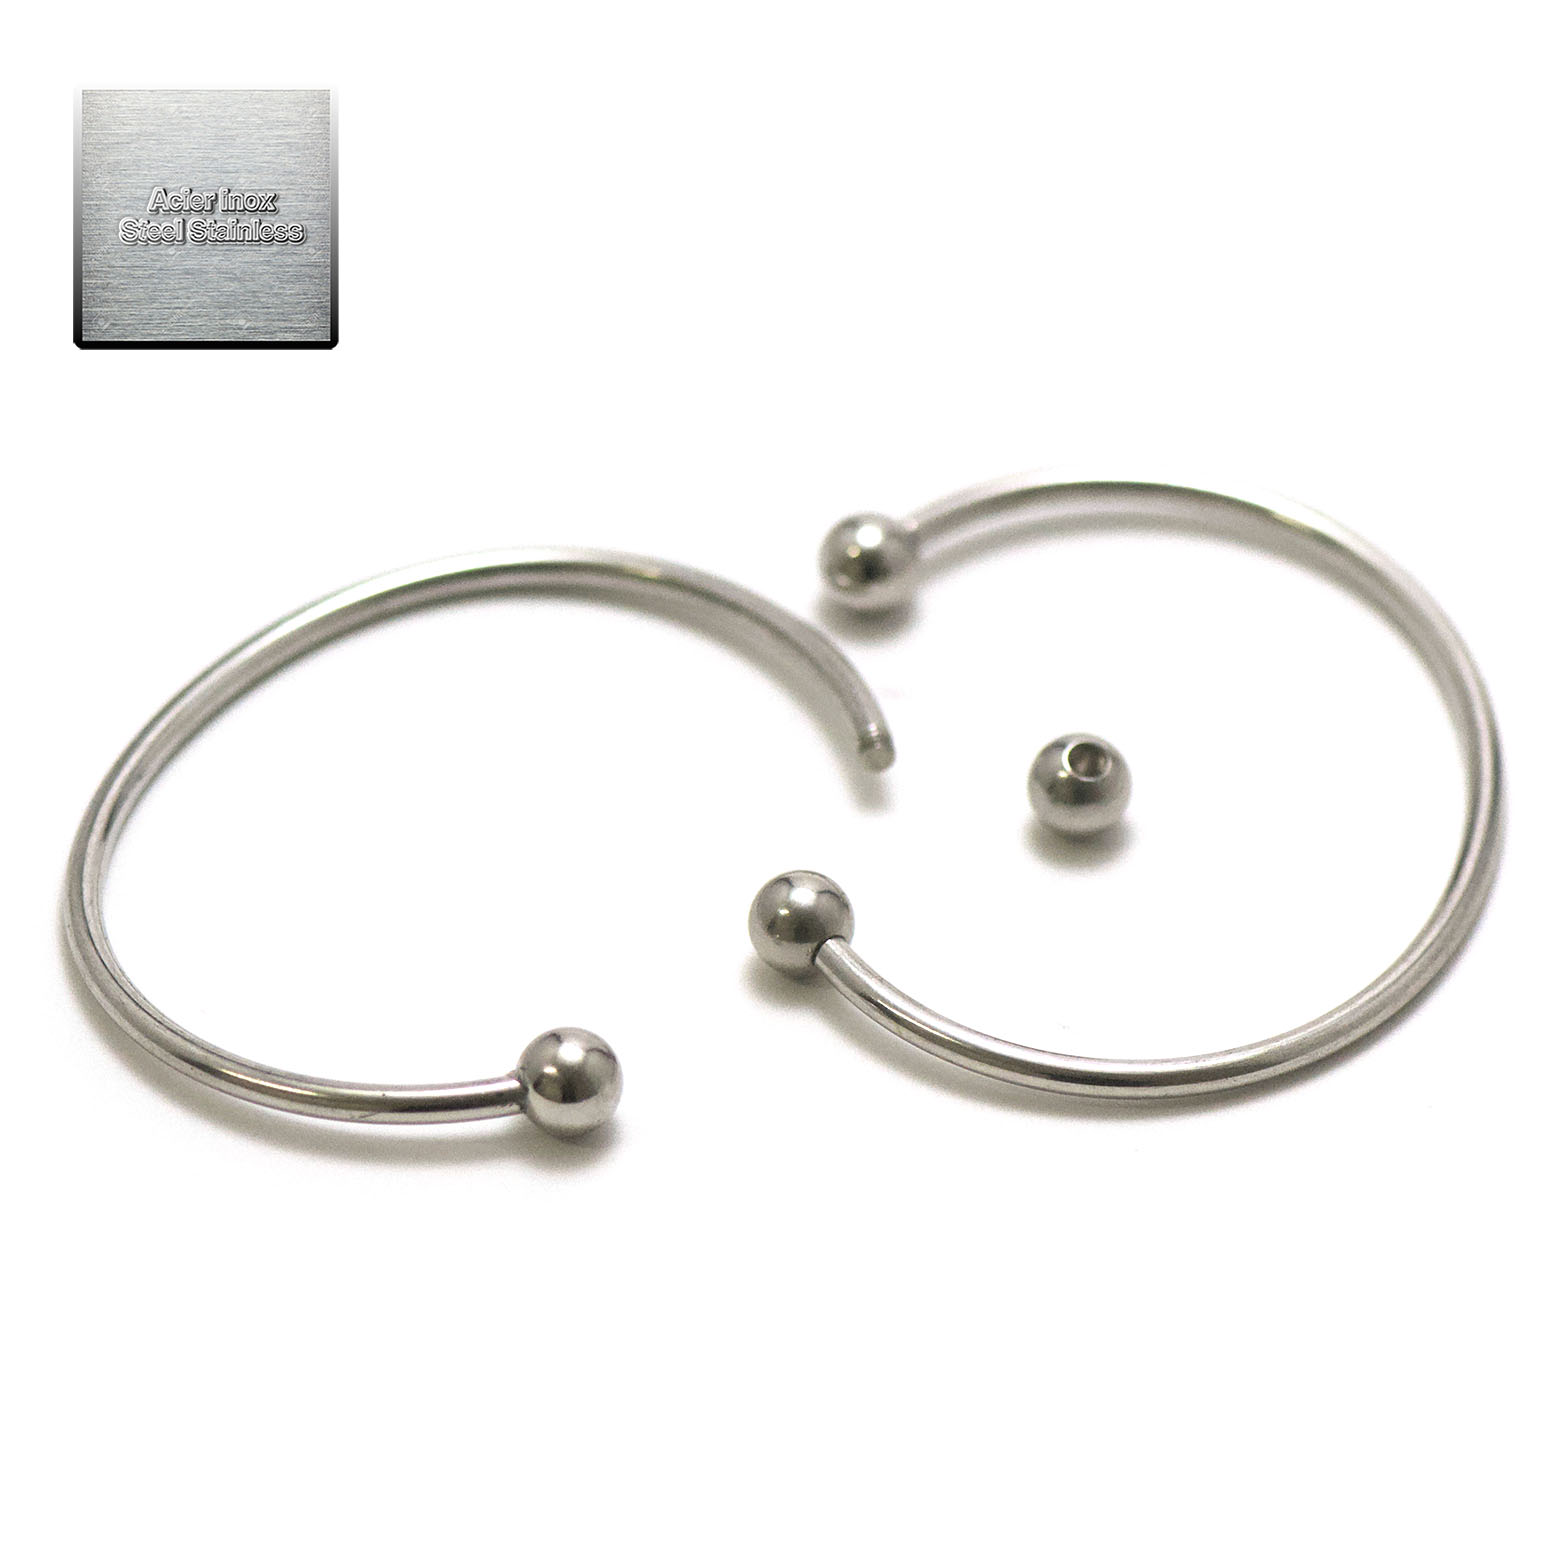 Acier inox: 1 support bracelet jonc perle, steel stainless